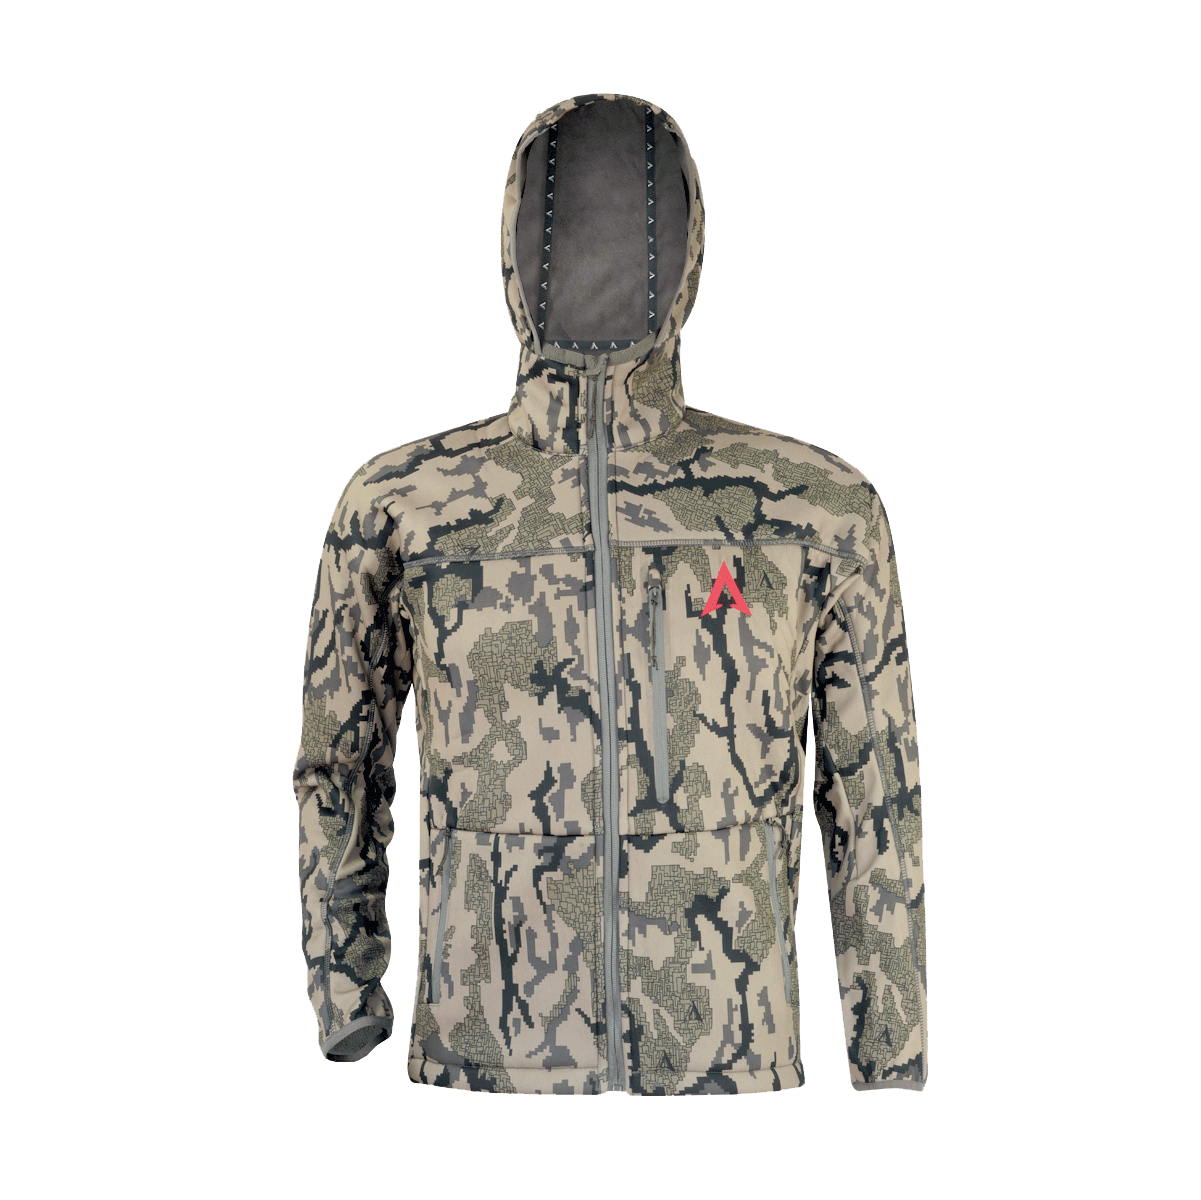 Top Rated Hunting Jackets - Mens Hunting Clothing